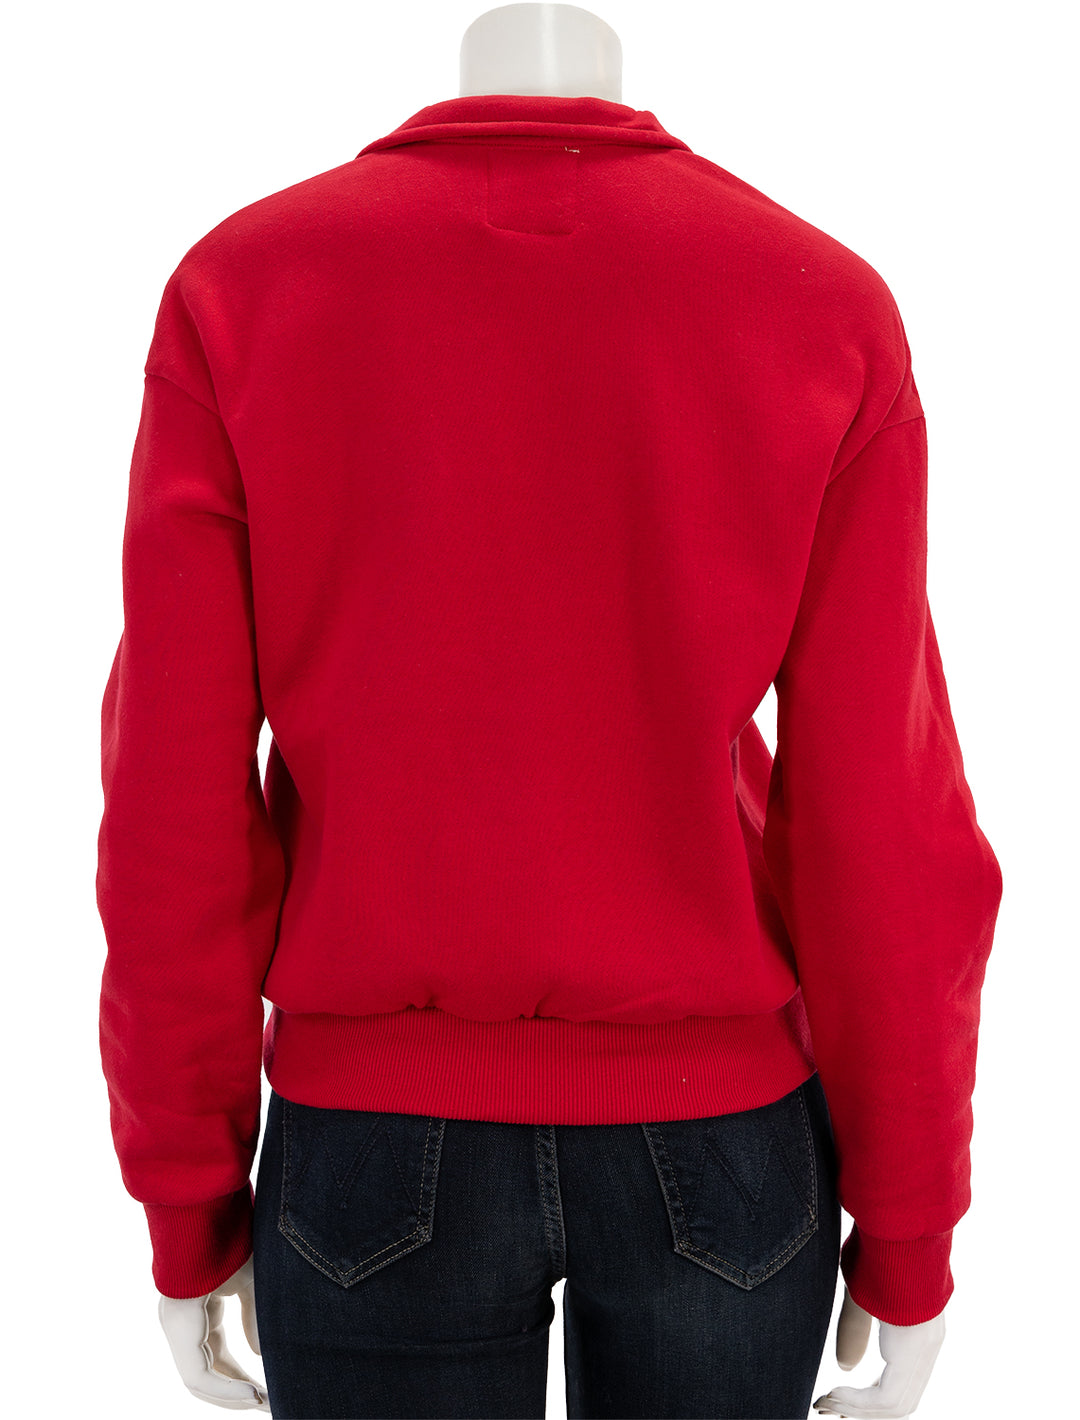 Back view of Recess Apparel's Fleece Polo Sweatshirt in Red.